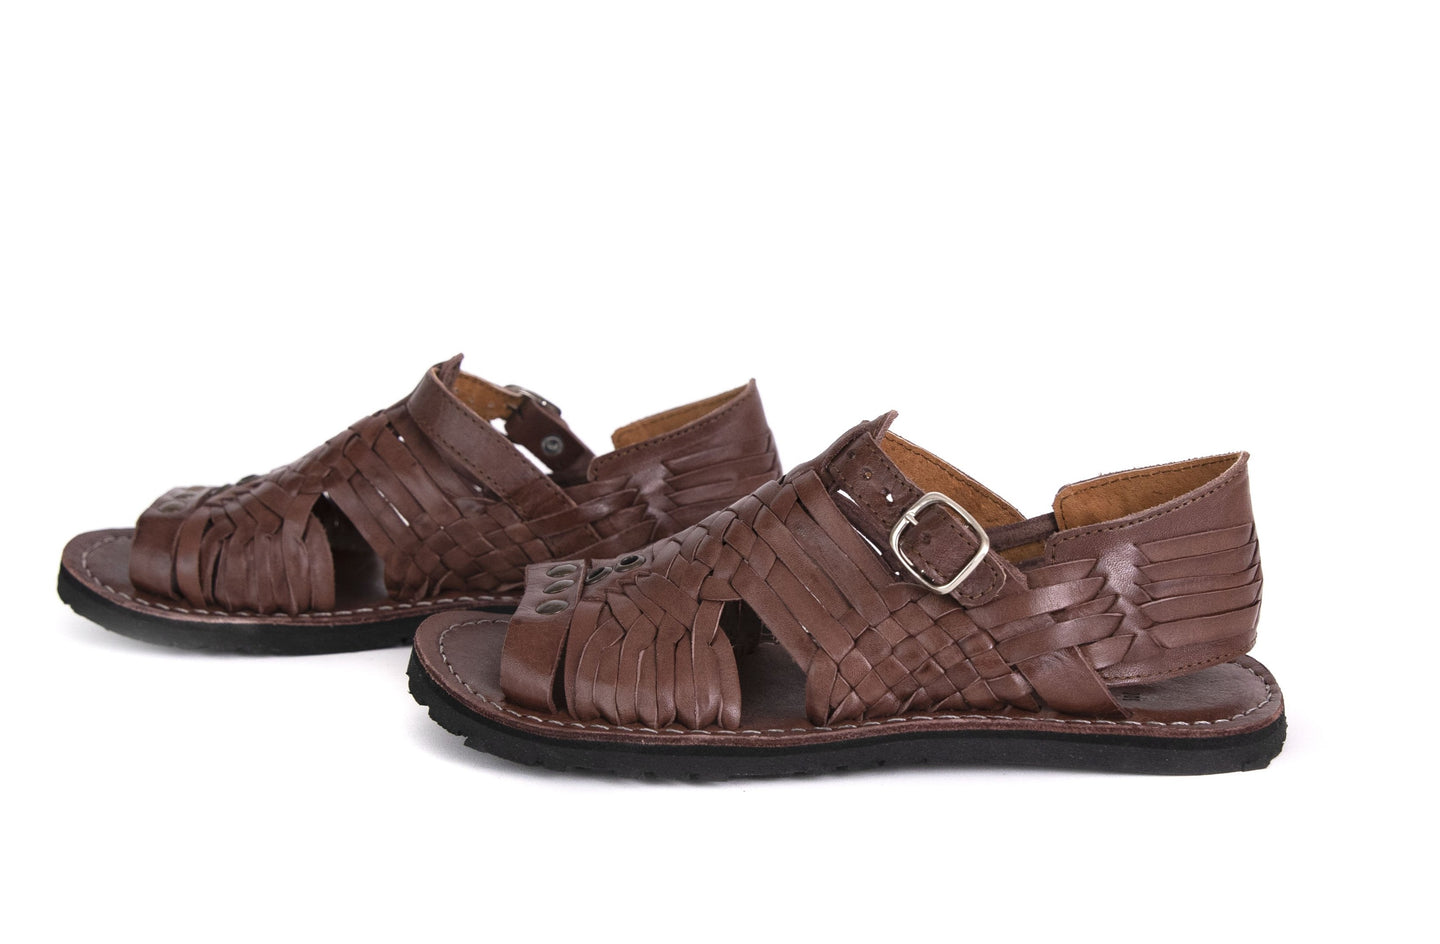 SIDREY Men's Pihuamo Huarache Sandals - Brown